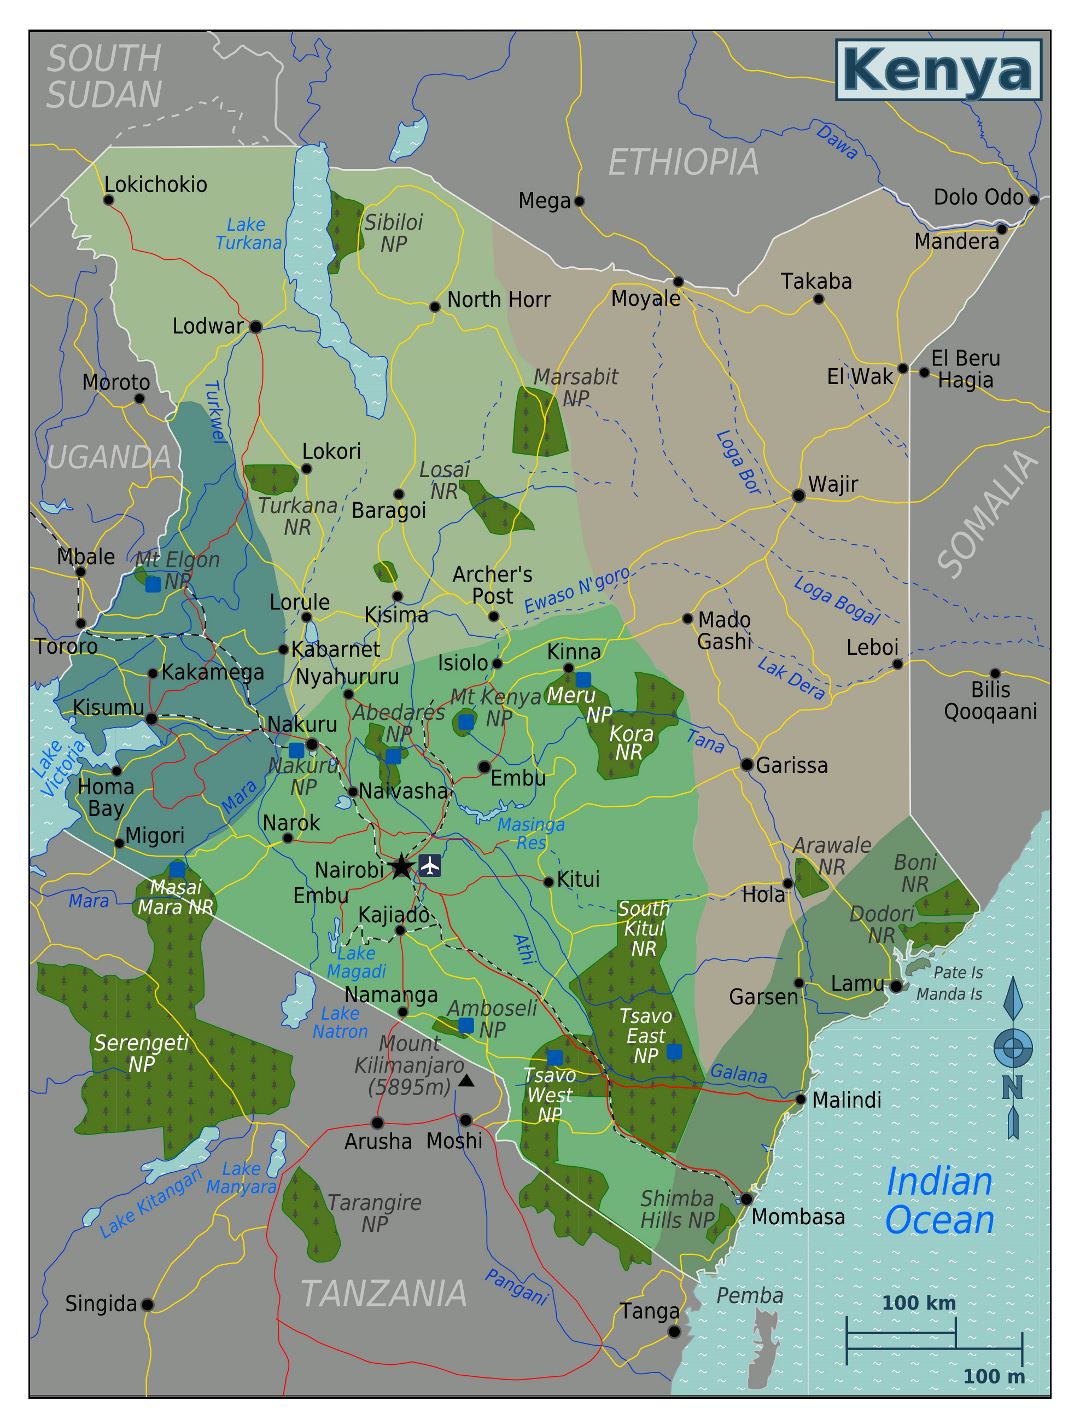 Large regions map of Kenya